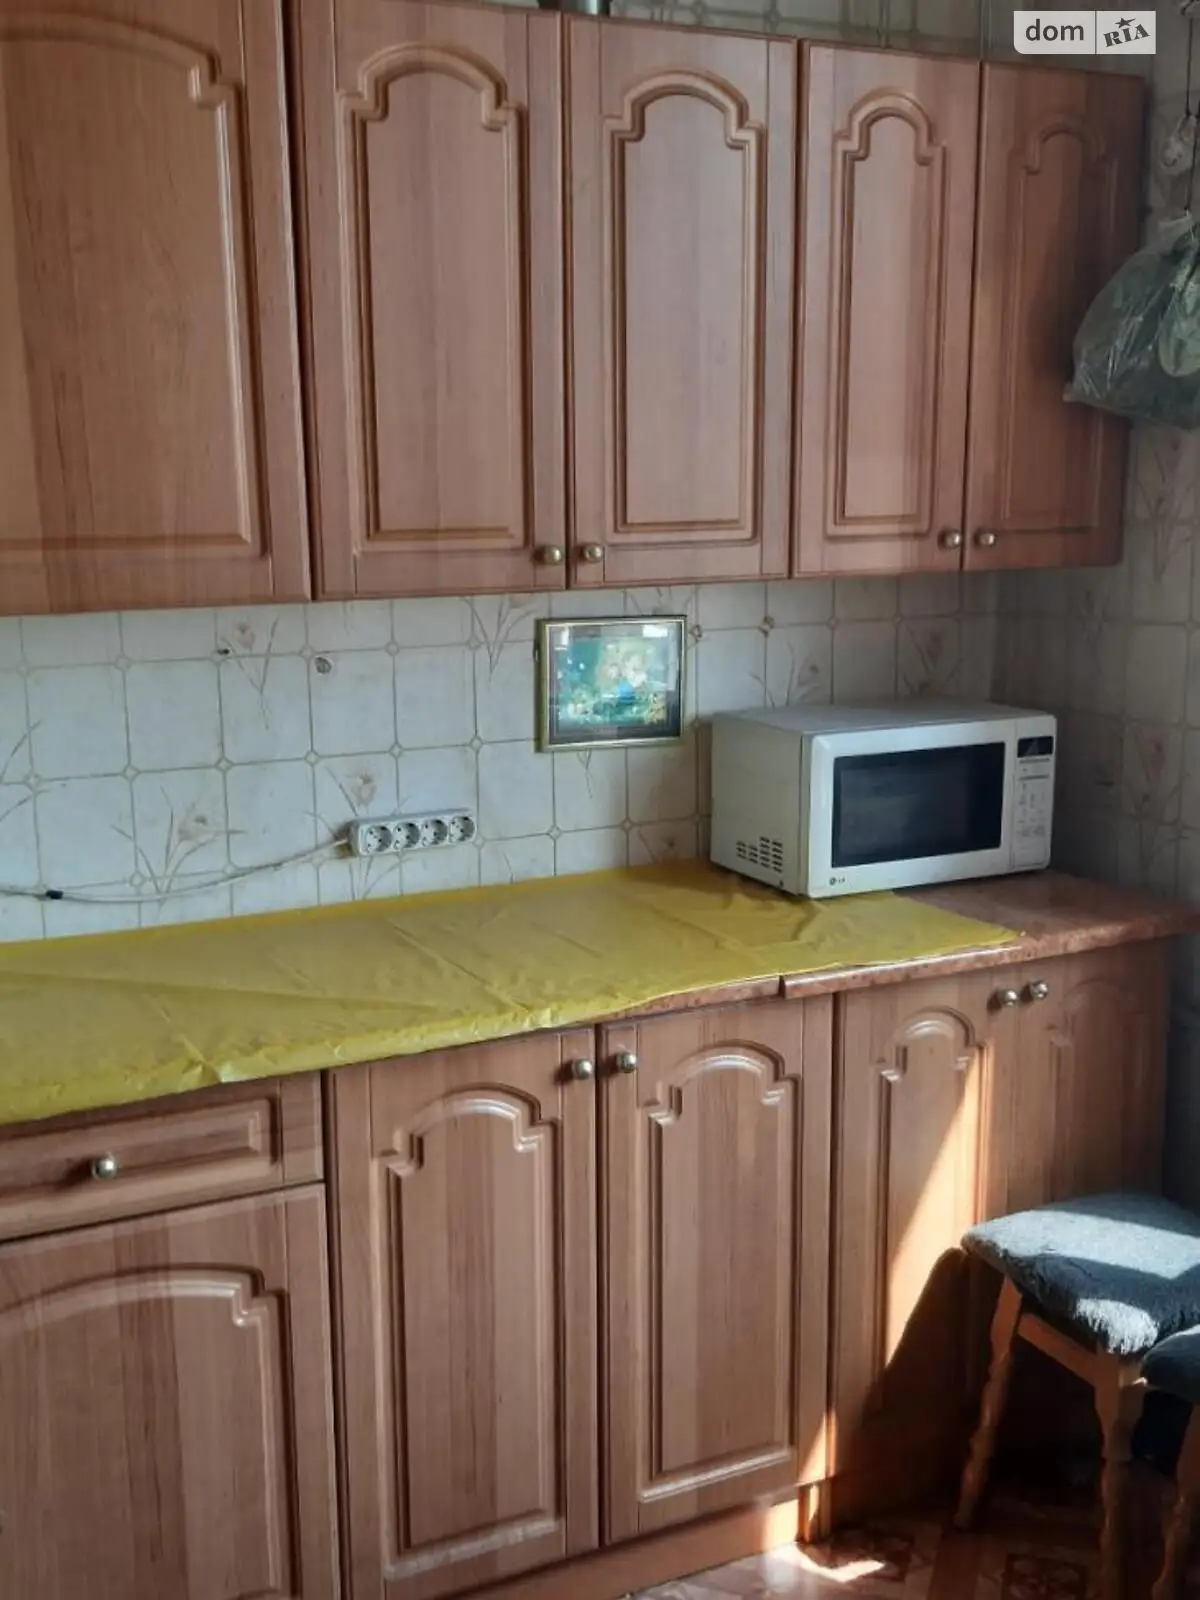 Продается комната 75 кв. м в Одессе, цена: 9500 $ - фото 1